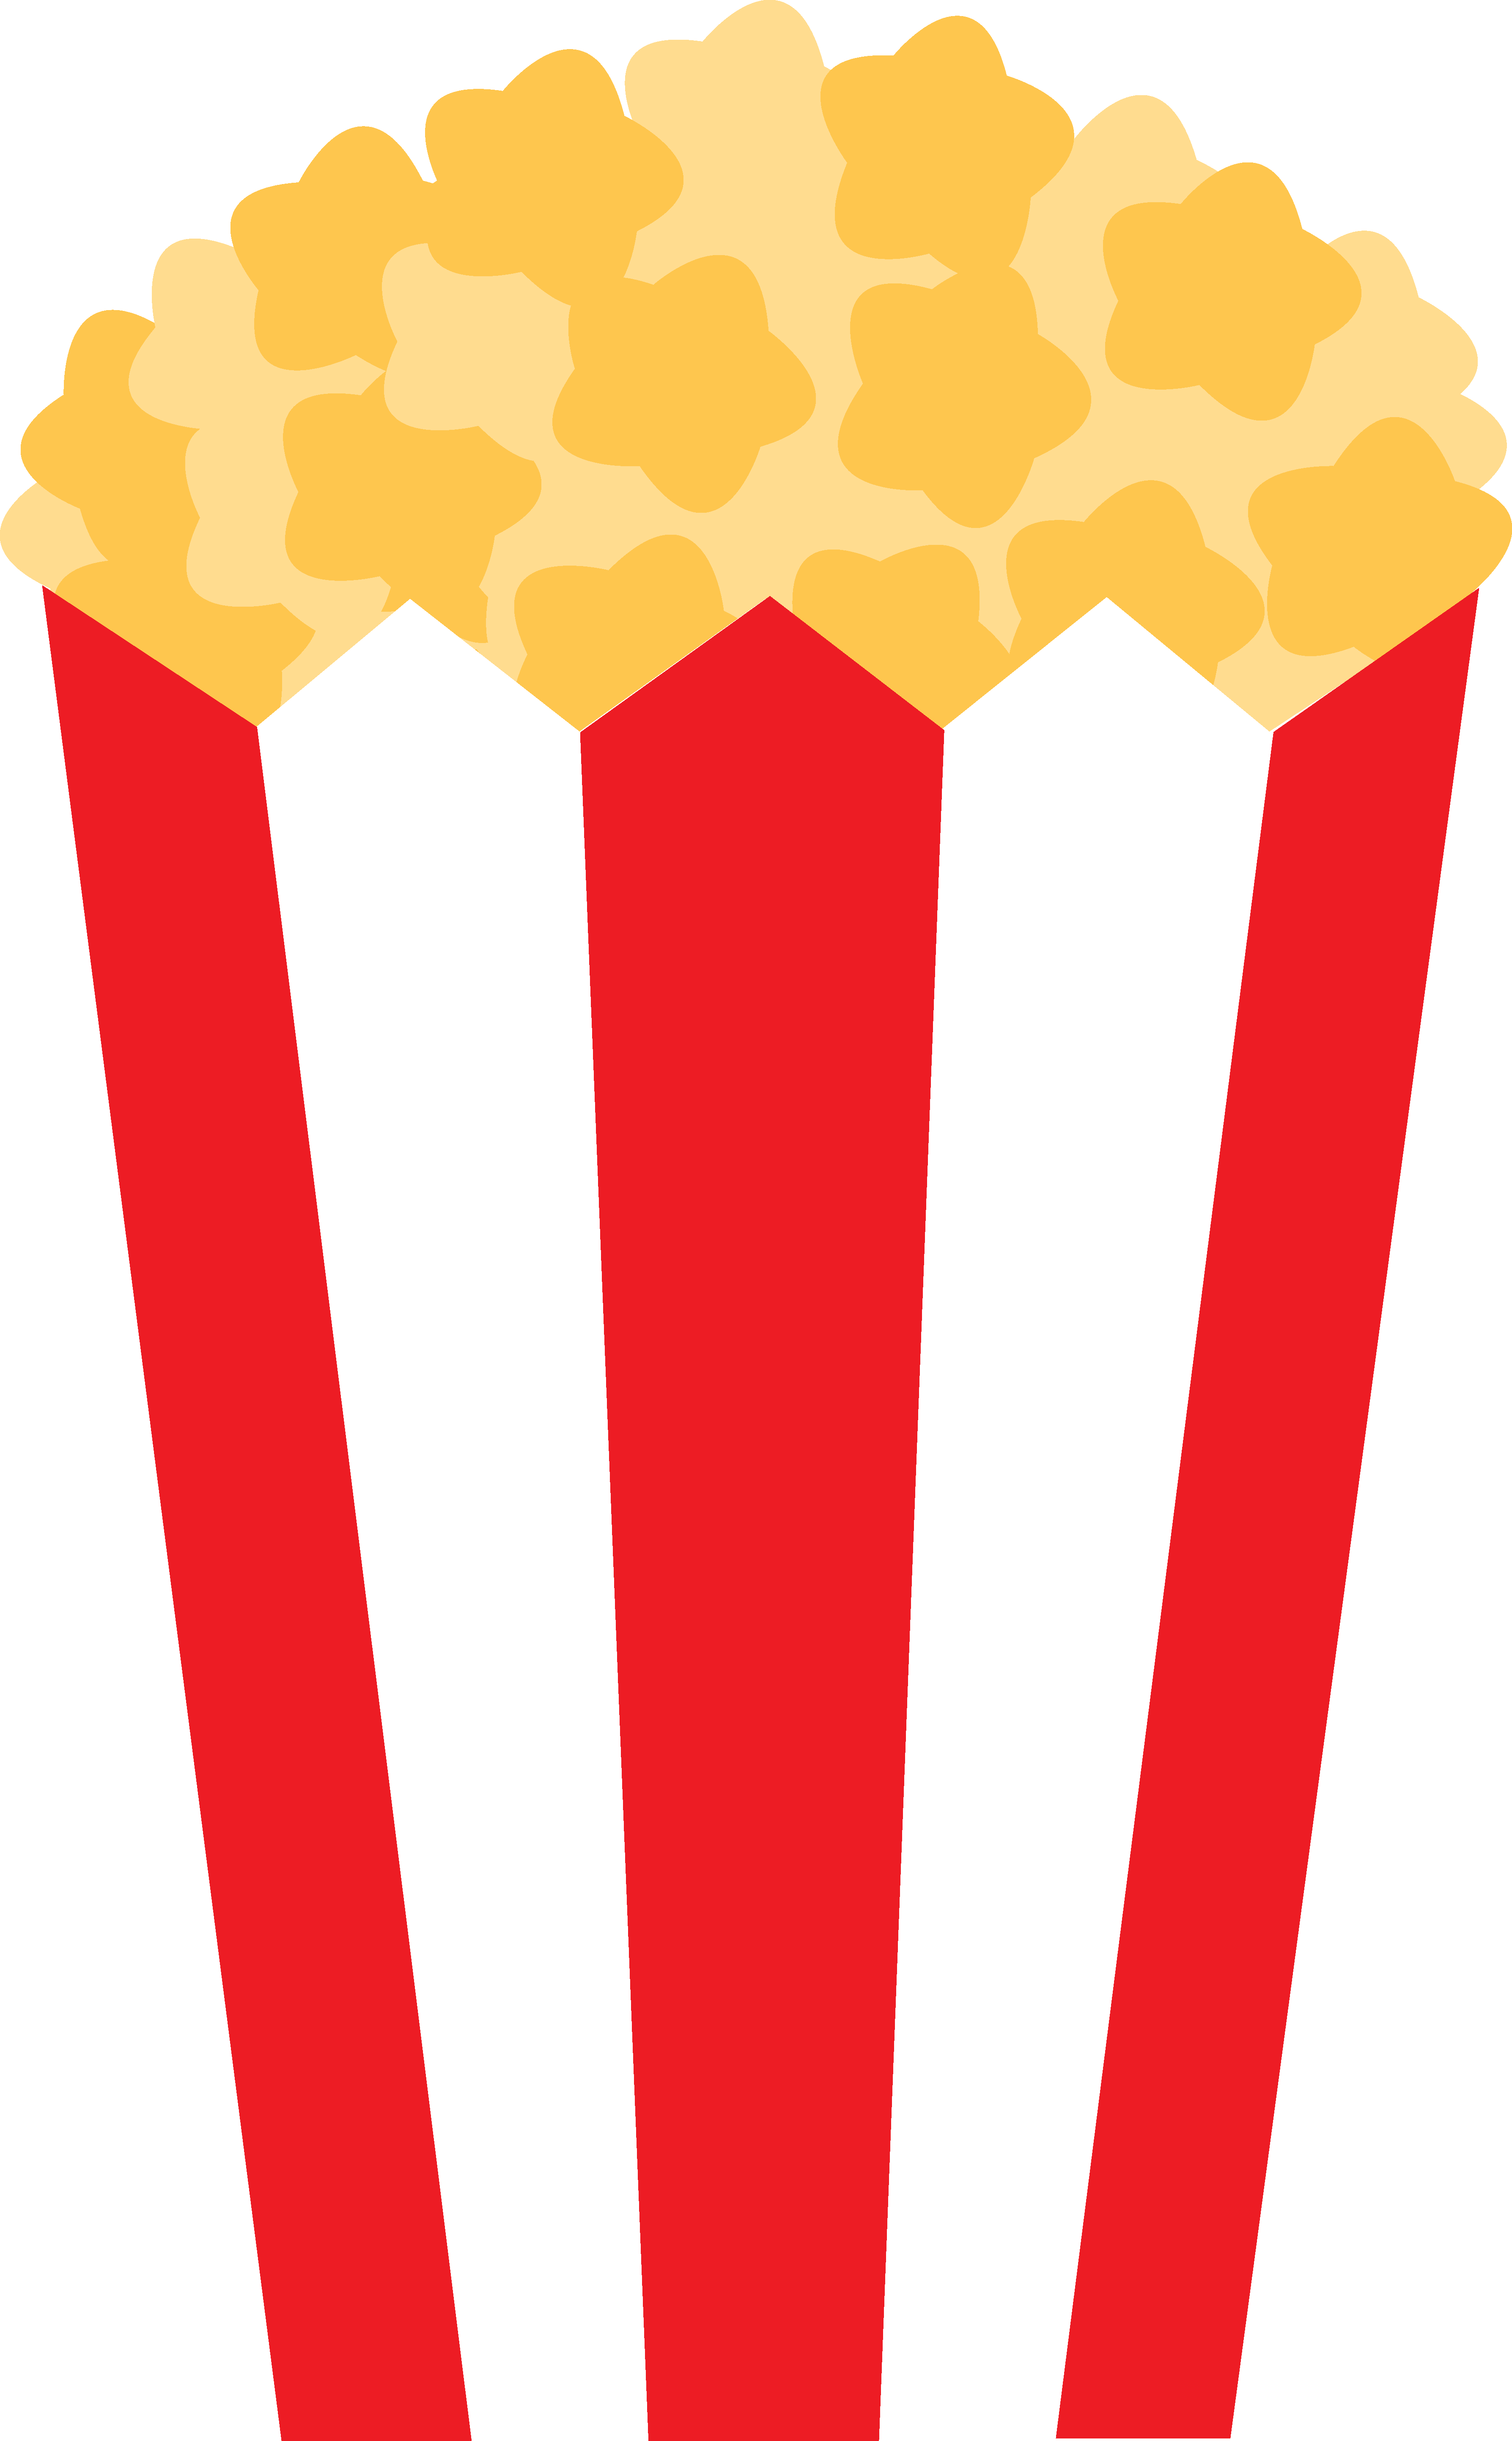 Cartoon Popcorn Images - Cliparts.co